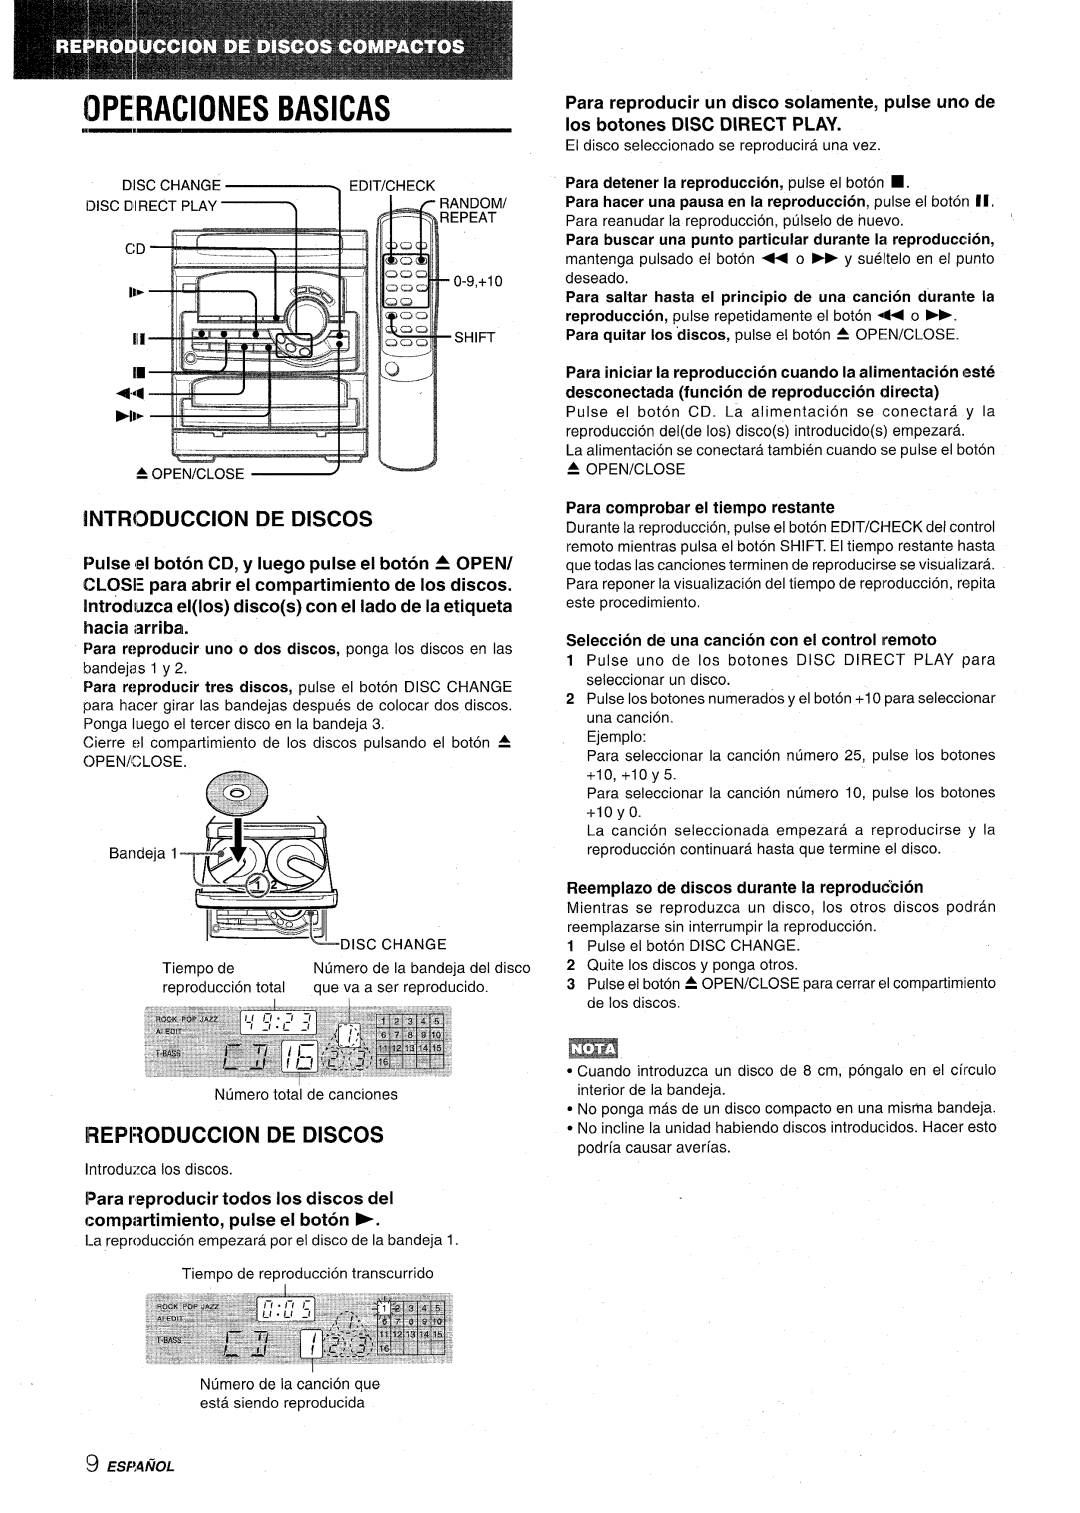 Aiwa CX-NA22 manual Basicas, Operaciones, Introduction De Discos, Reiwoduccion De Discos, hacia arriba 